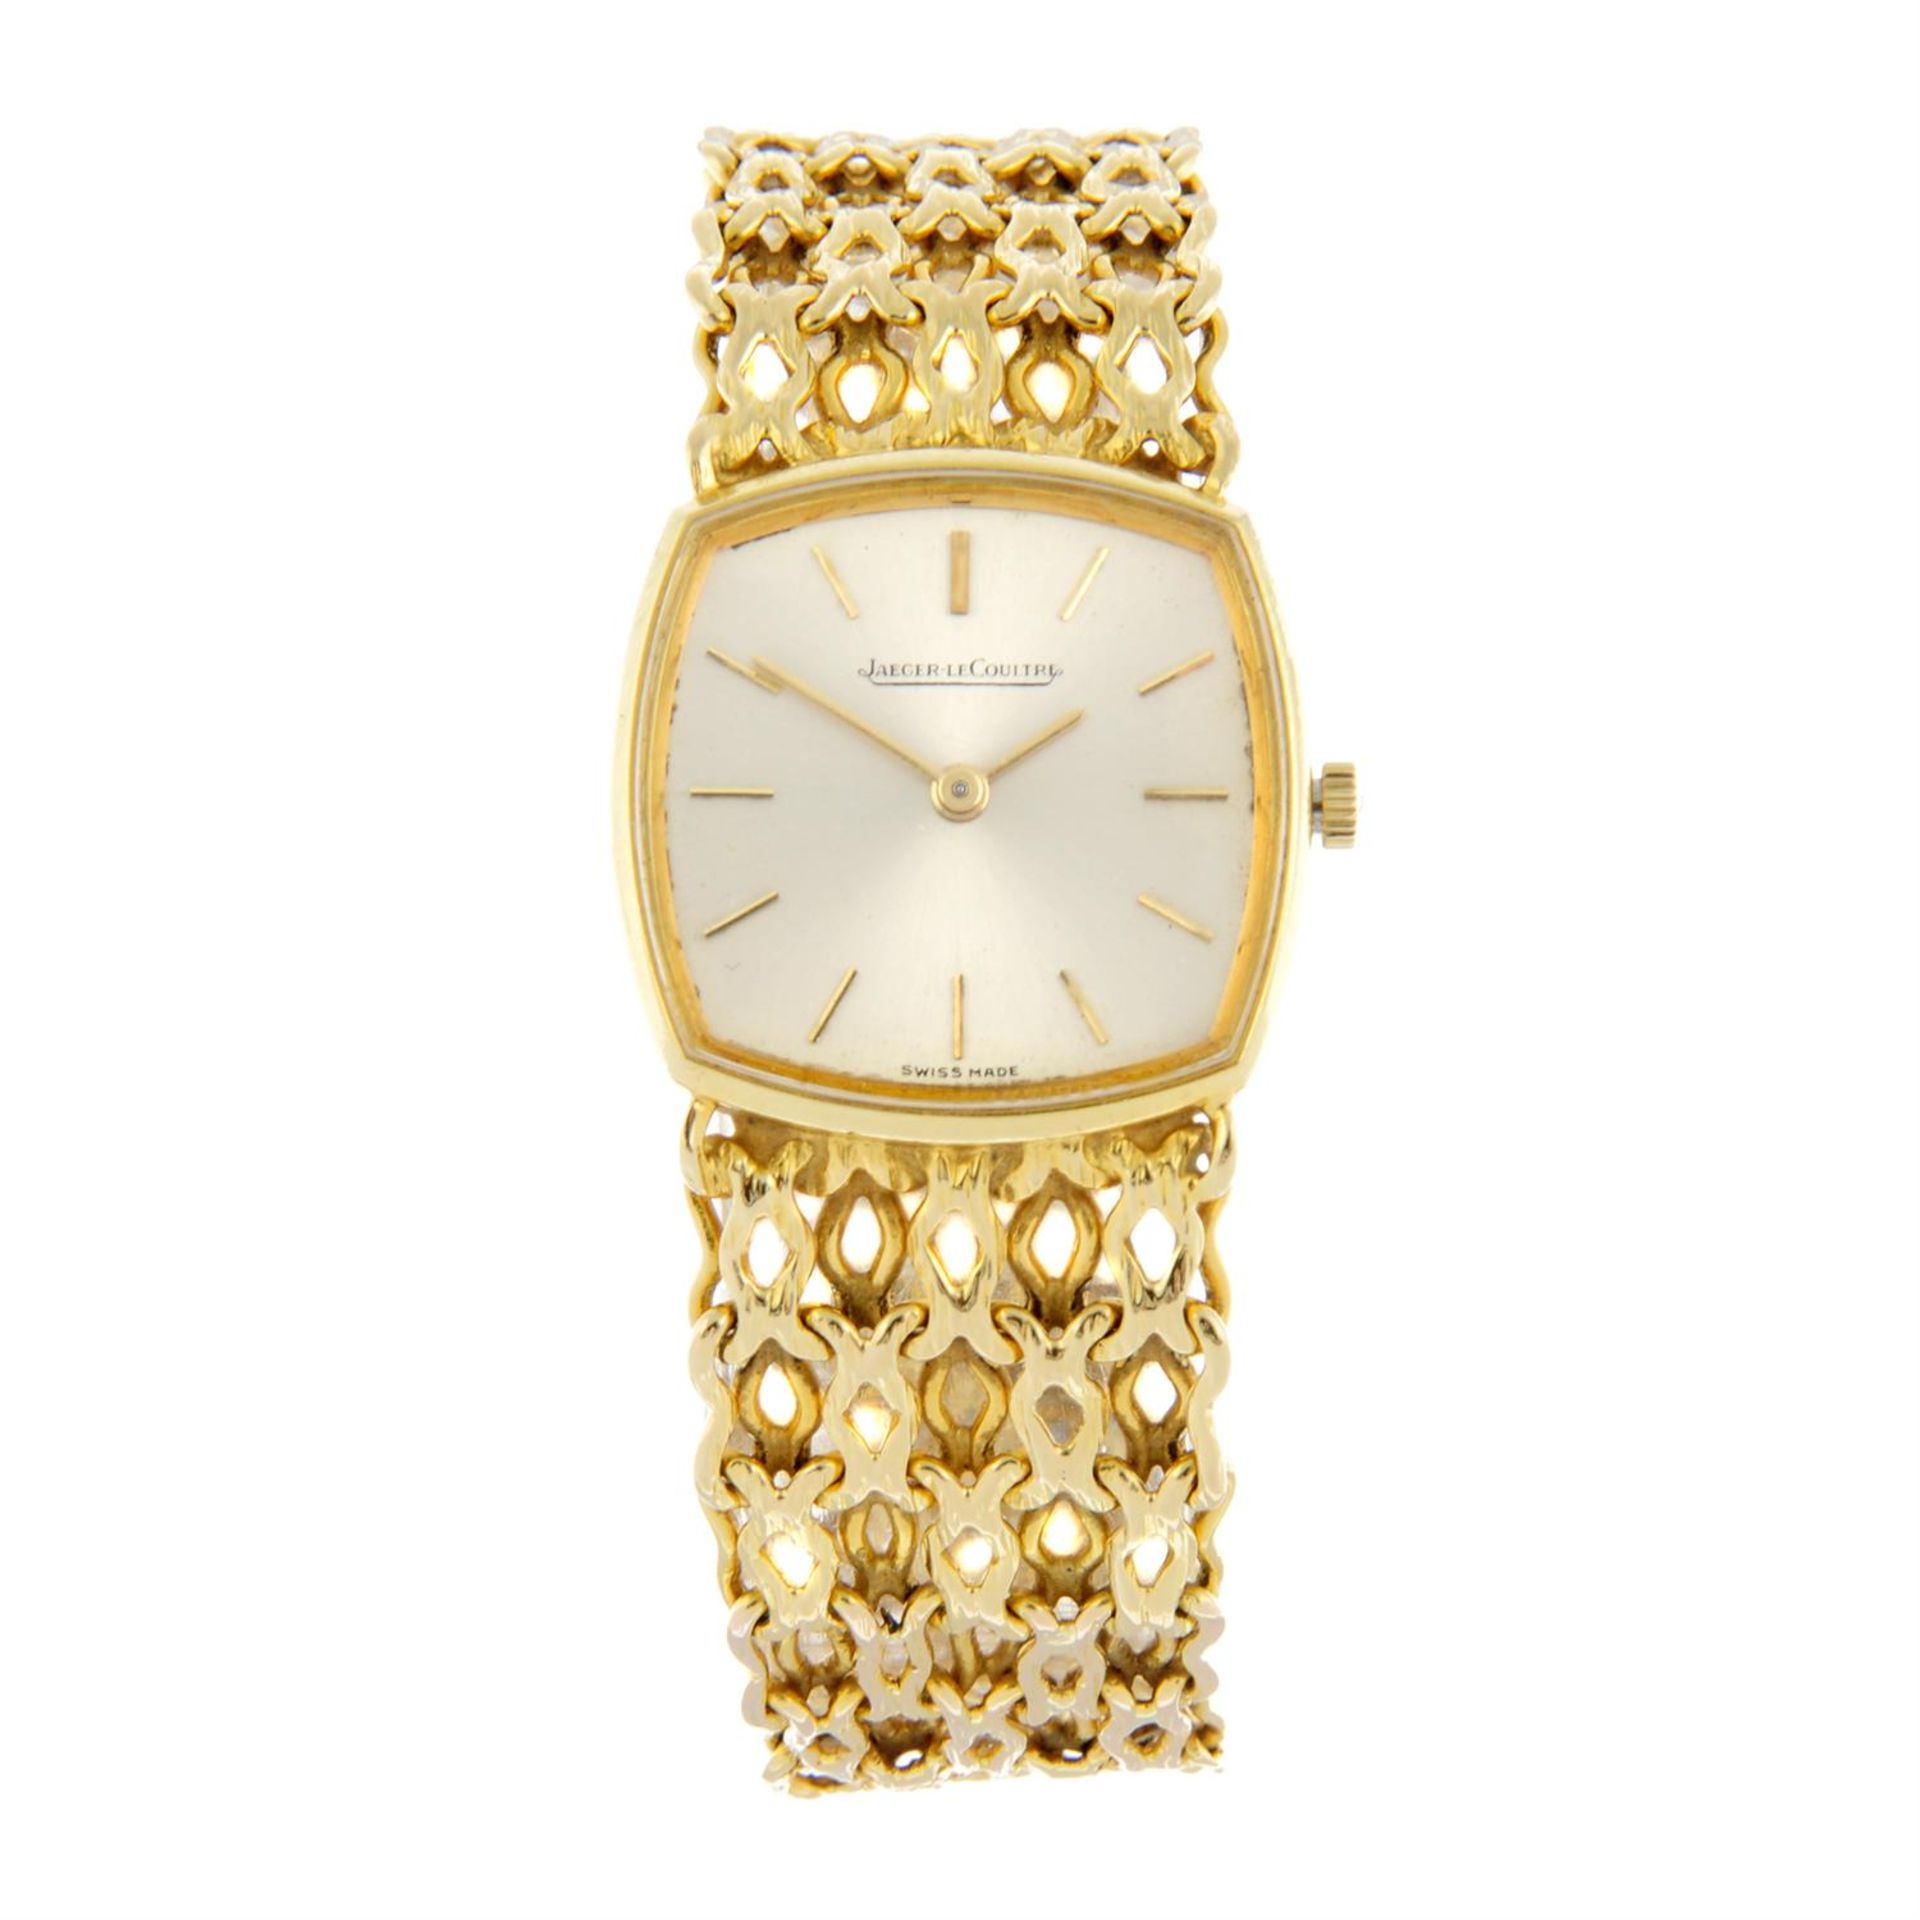 JAEGER-LECOULTRE - an 18ct yellow gold bracelet watch, 23mm.